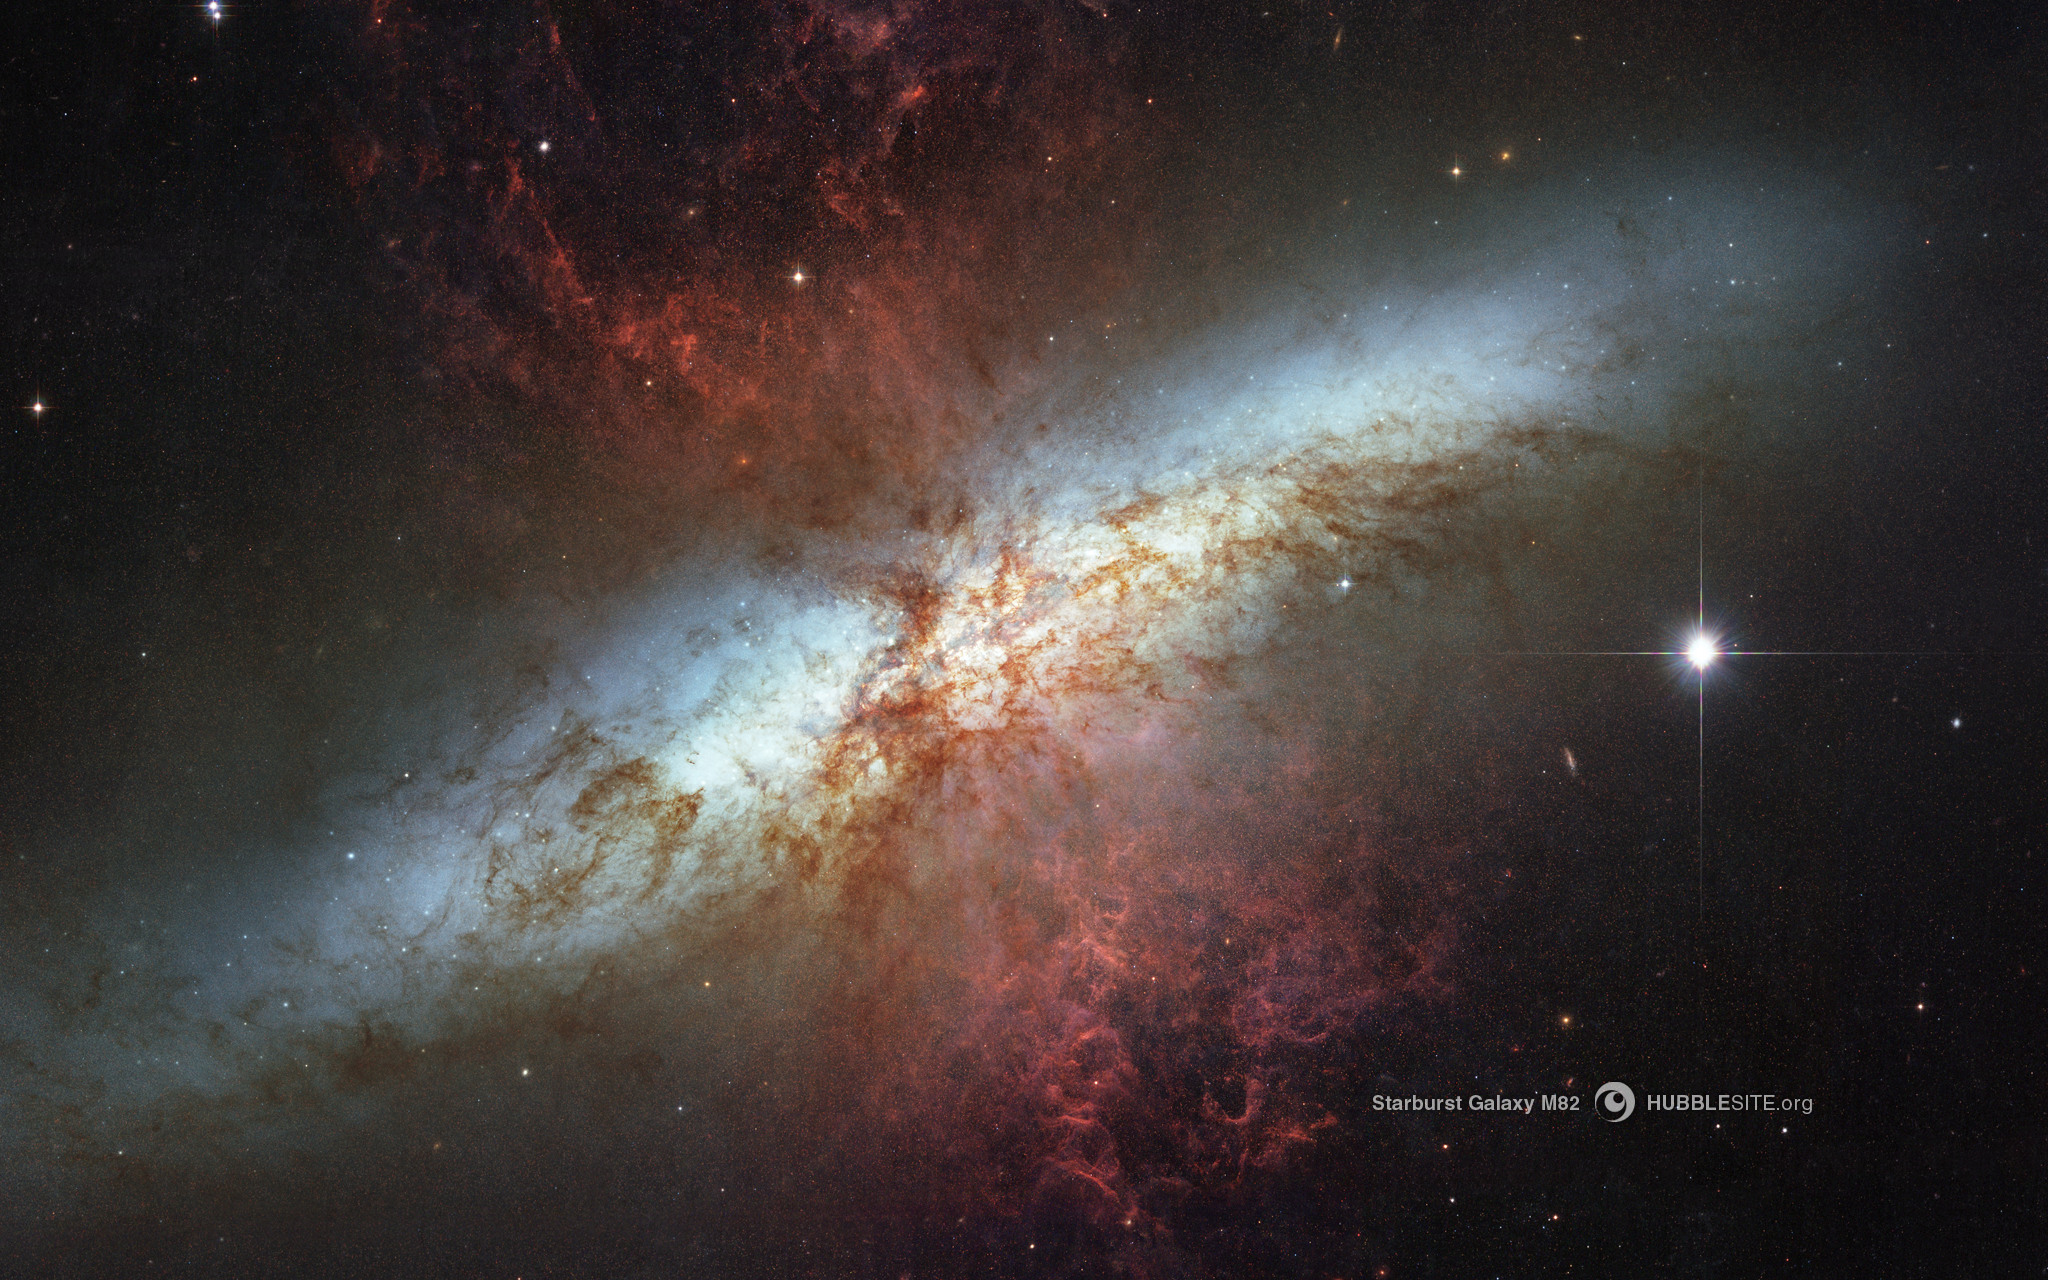 Starburst Galaxy M82